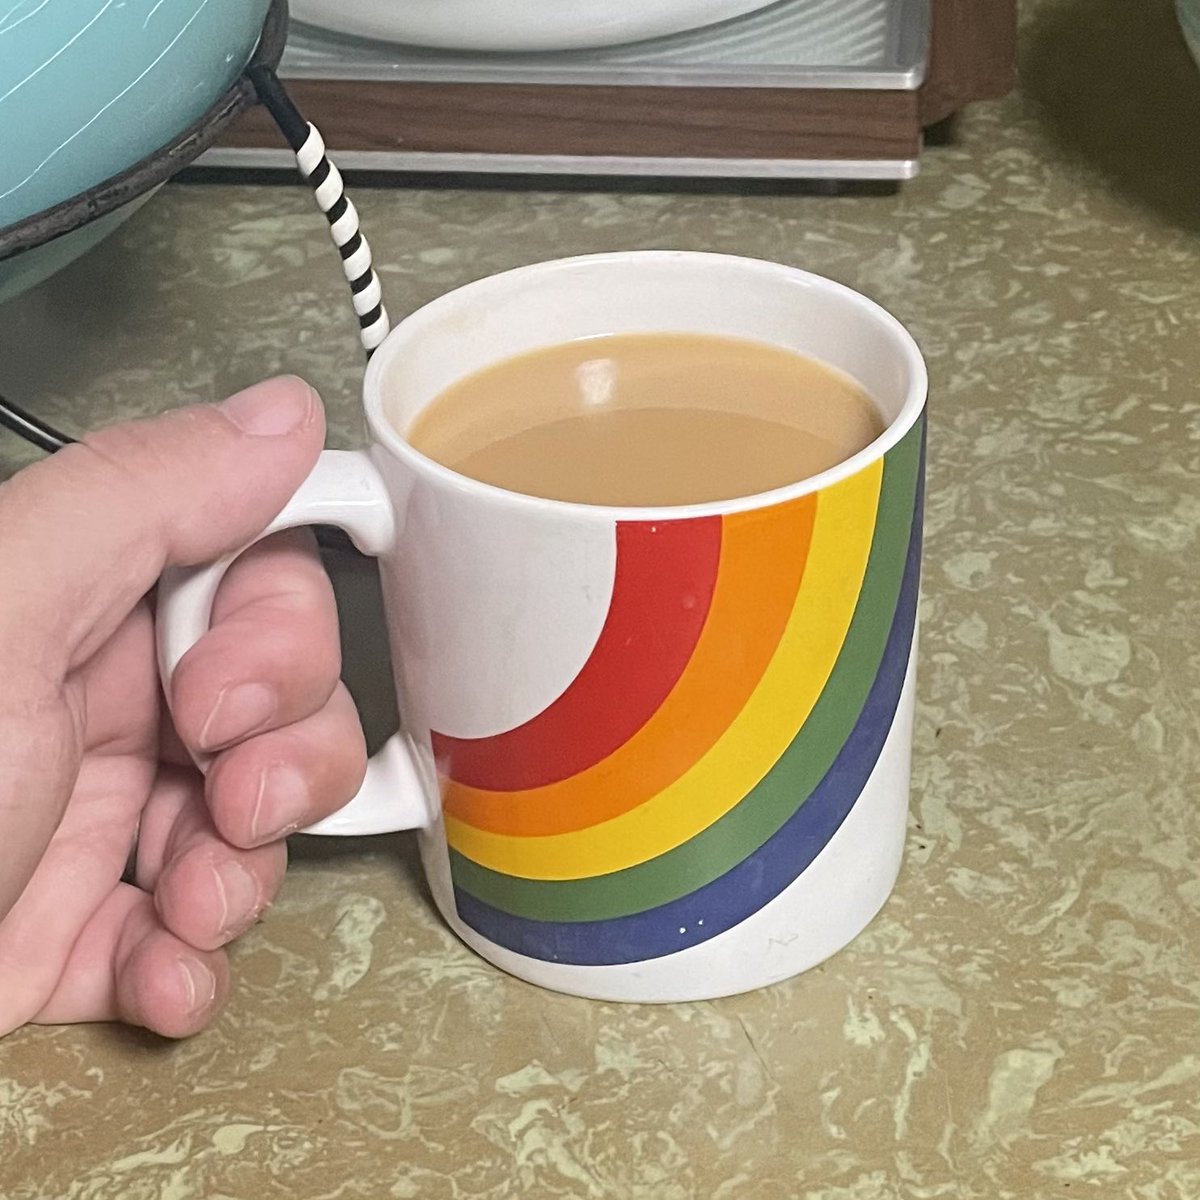 A vintage cup of joe is a great way to start a Friday…cheers! 🌈 #coffee #coffeemug #vintagecoffeemug #rainbow #rainbowmug #friday